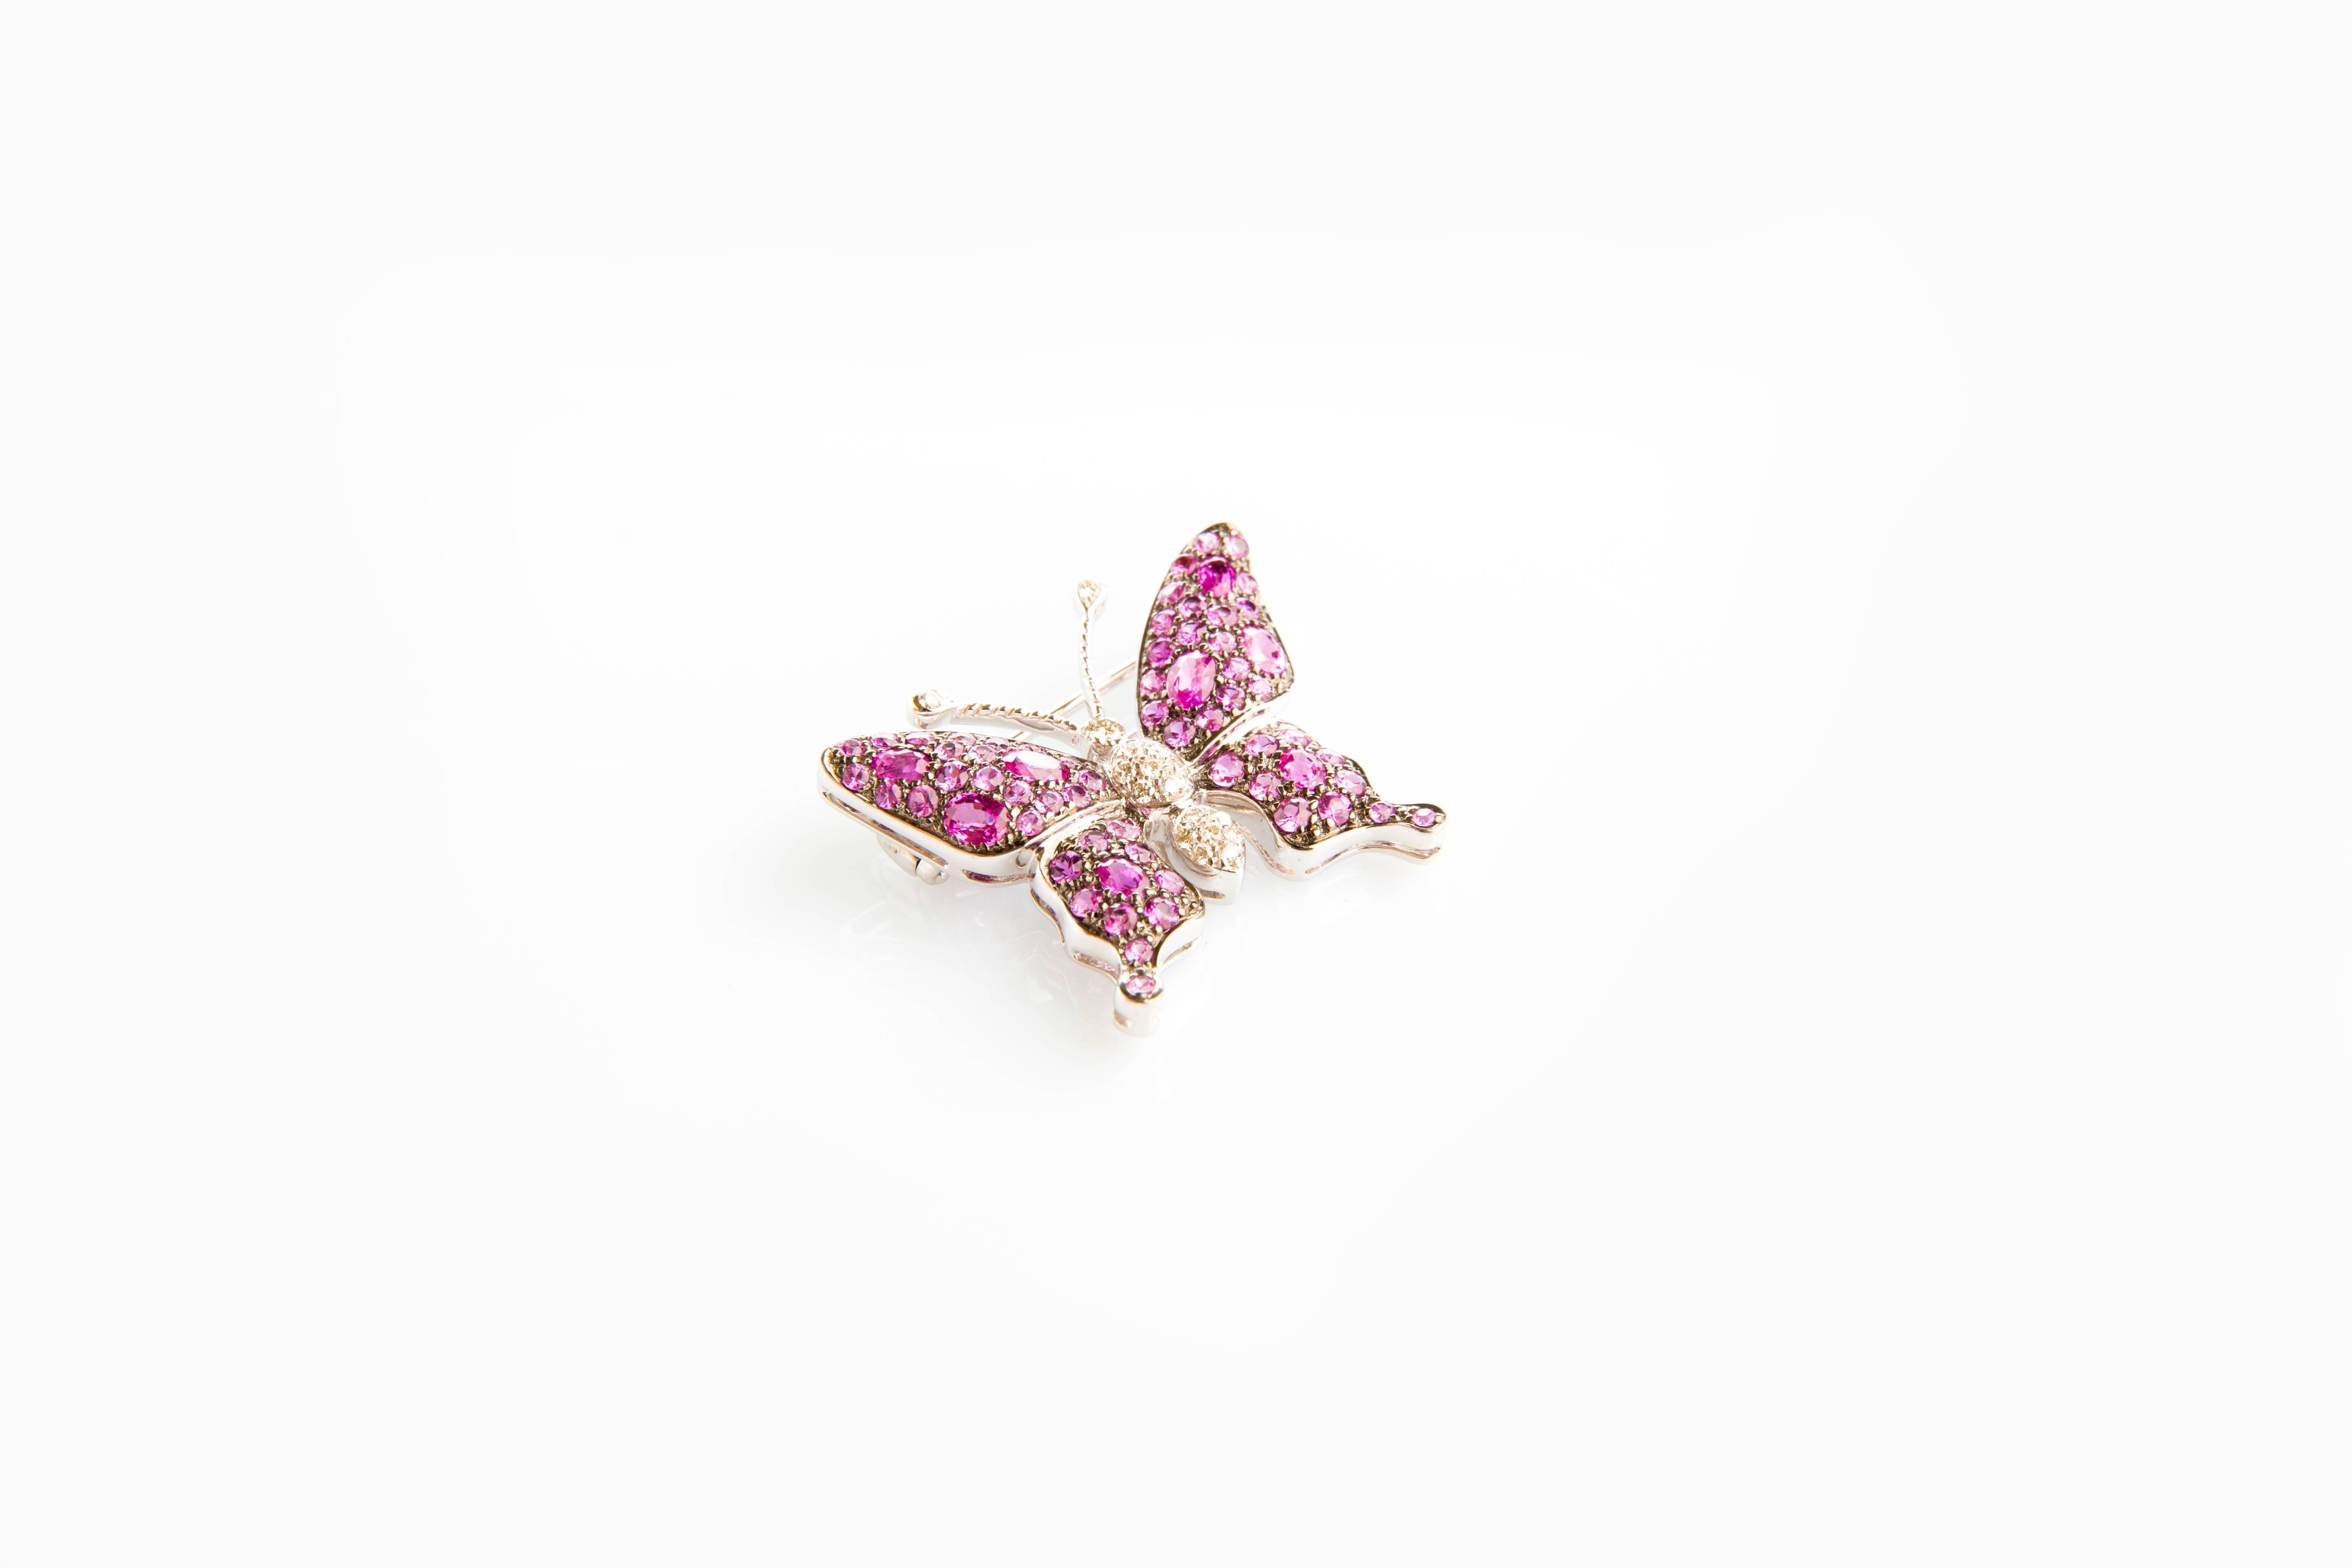 Pink Butterfly Brooch
Pink Sapphire 1.53ct
Diamond 0.16ct H-I/vs
Pink Tourmaline 0.46ct
Rubelite 0.52ct
White Gold 18K